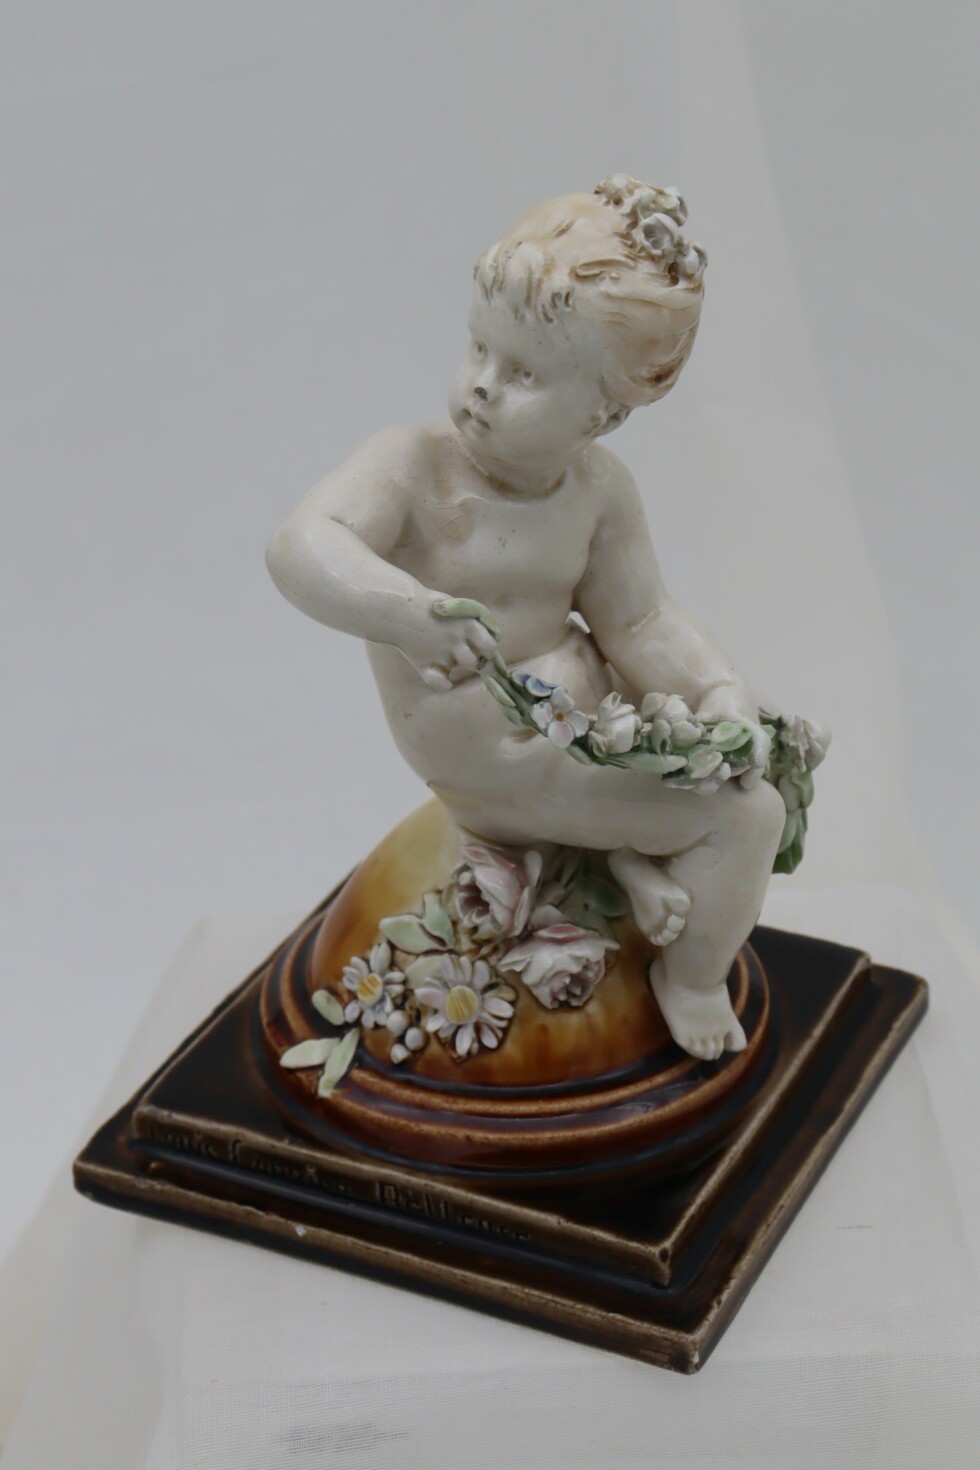 Cherub figurine by Louis Carrier-Belleuse